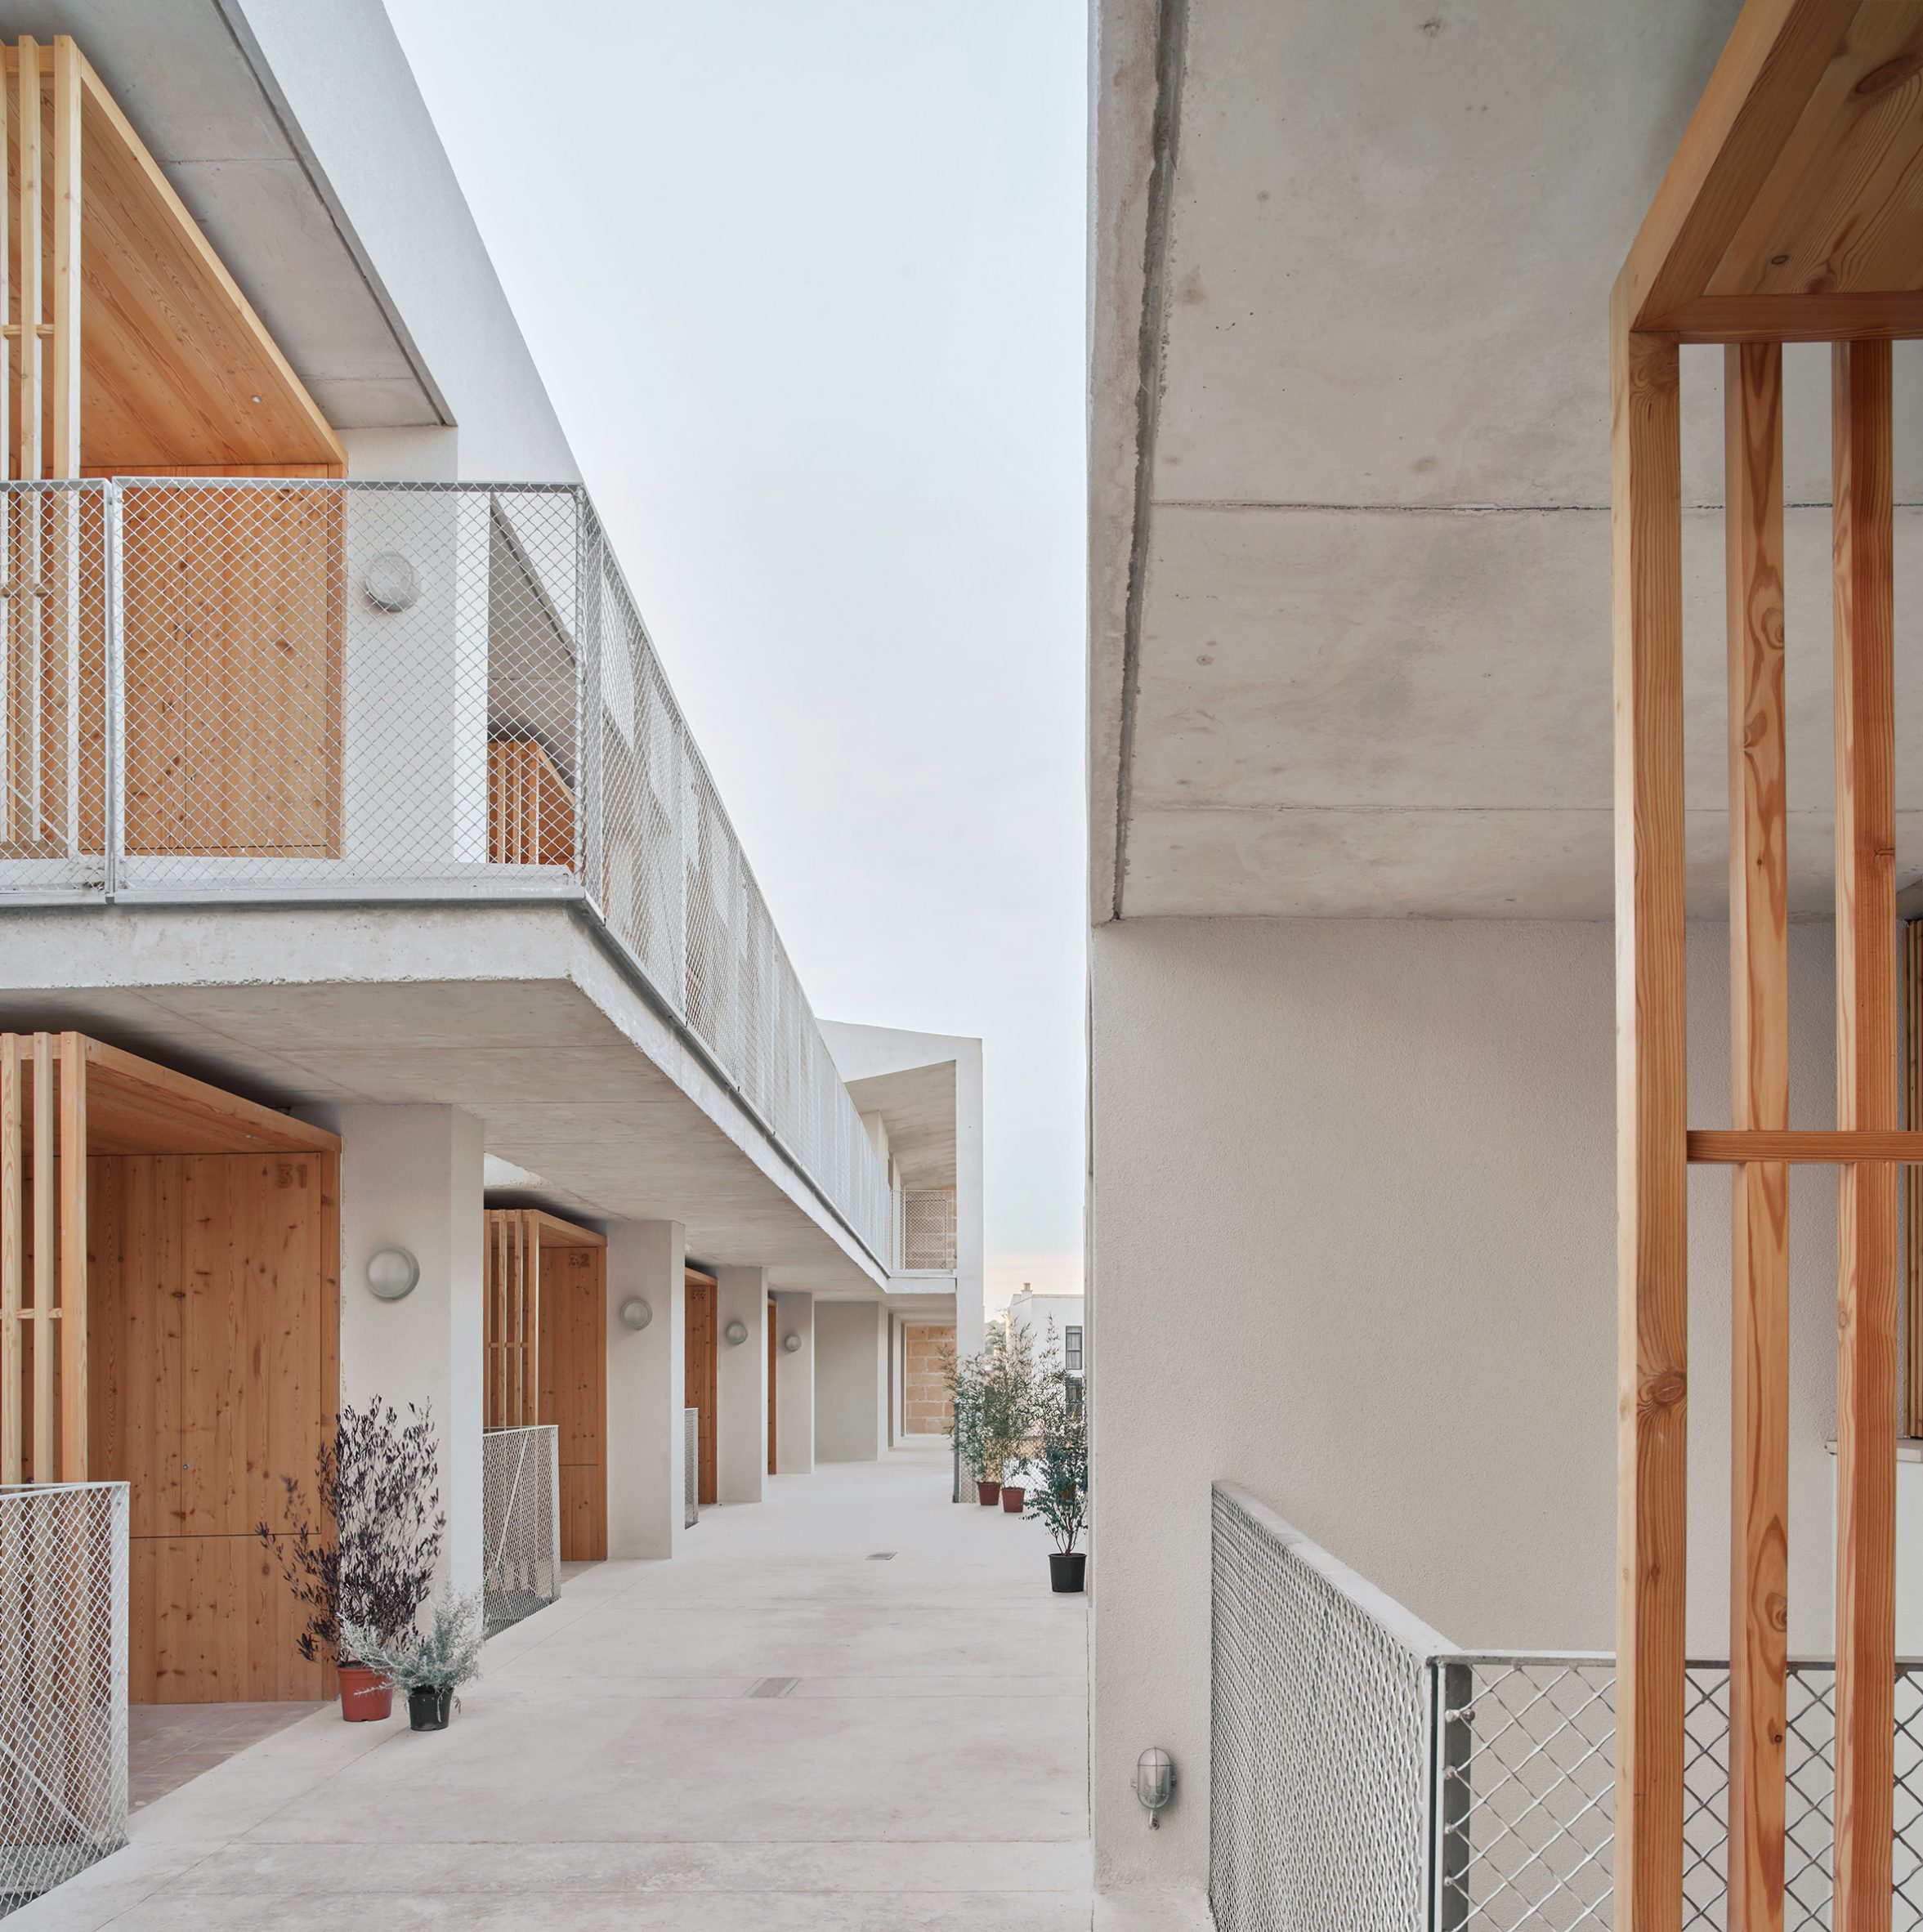 Social housing in Mallorca by Peris+Toral Arquitectes